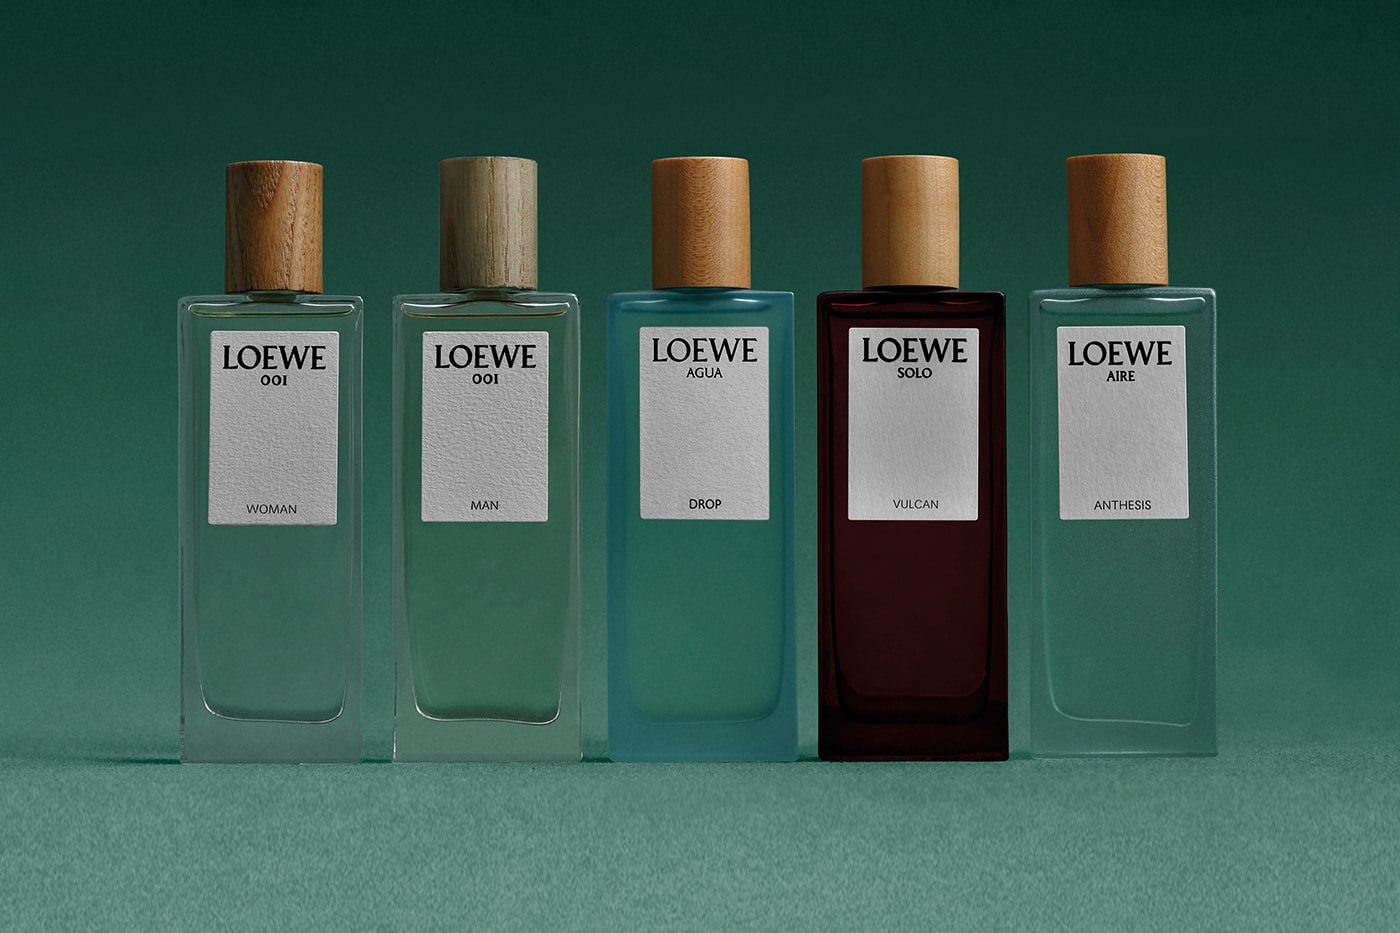 LOEWE Solo Vulcan & Agua Drop Fragrances Spanish Rockrose wildflower Info Release 